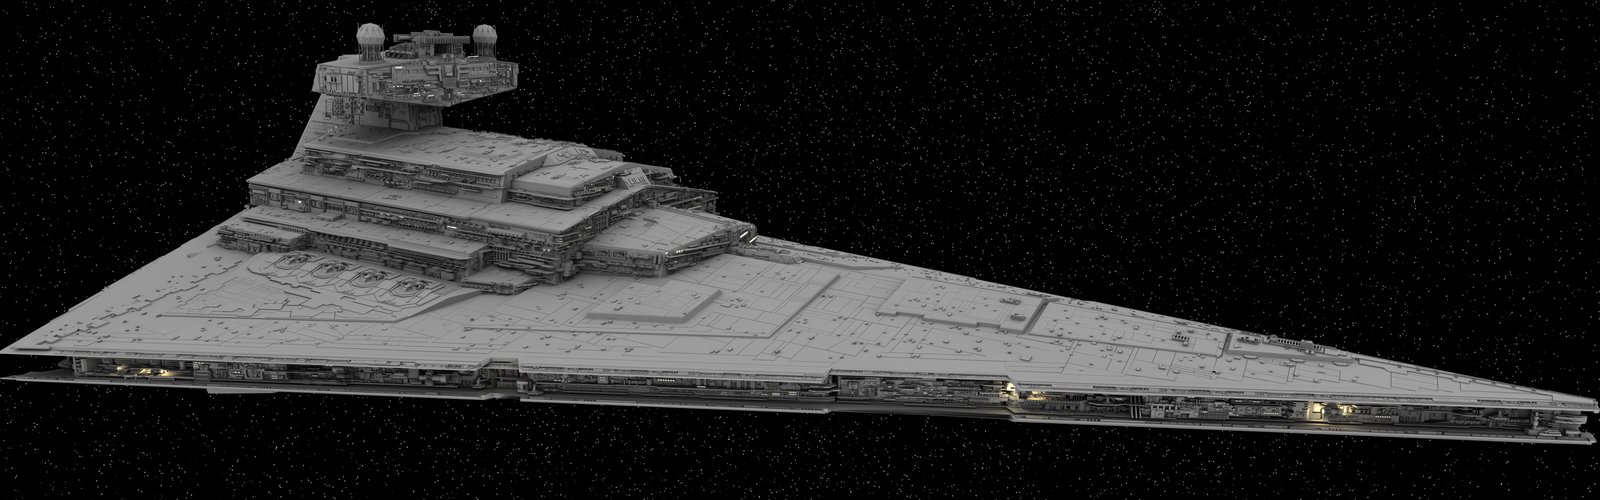 Imperial Star Destroyer By Imrayya